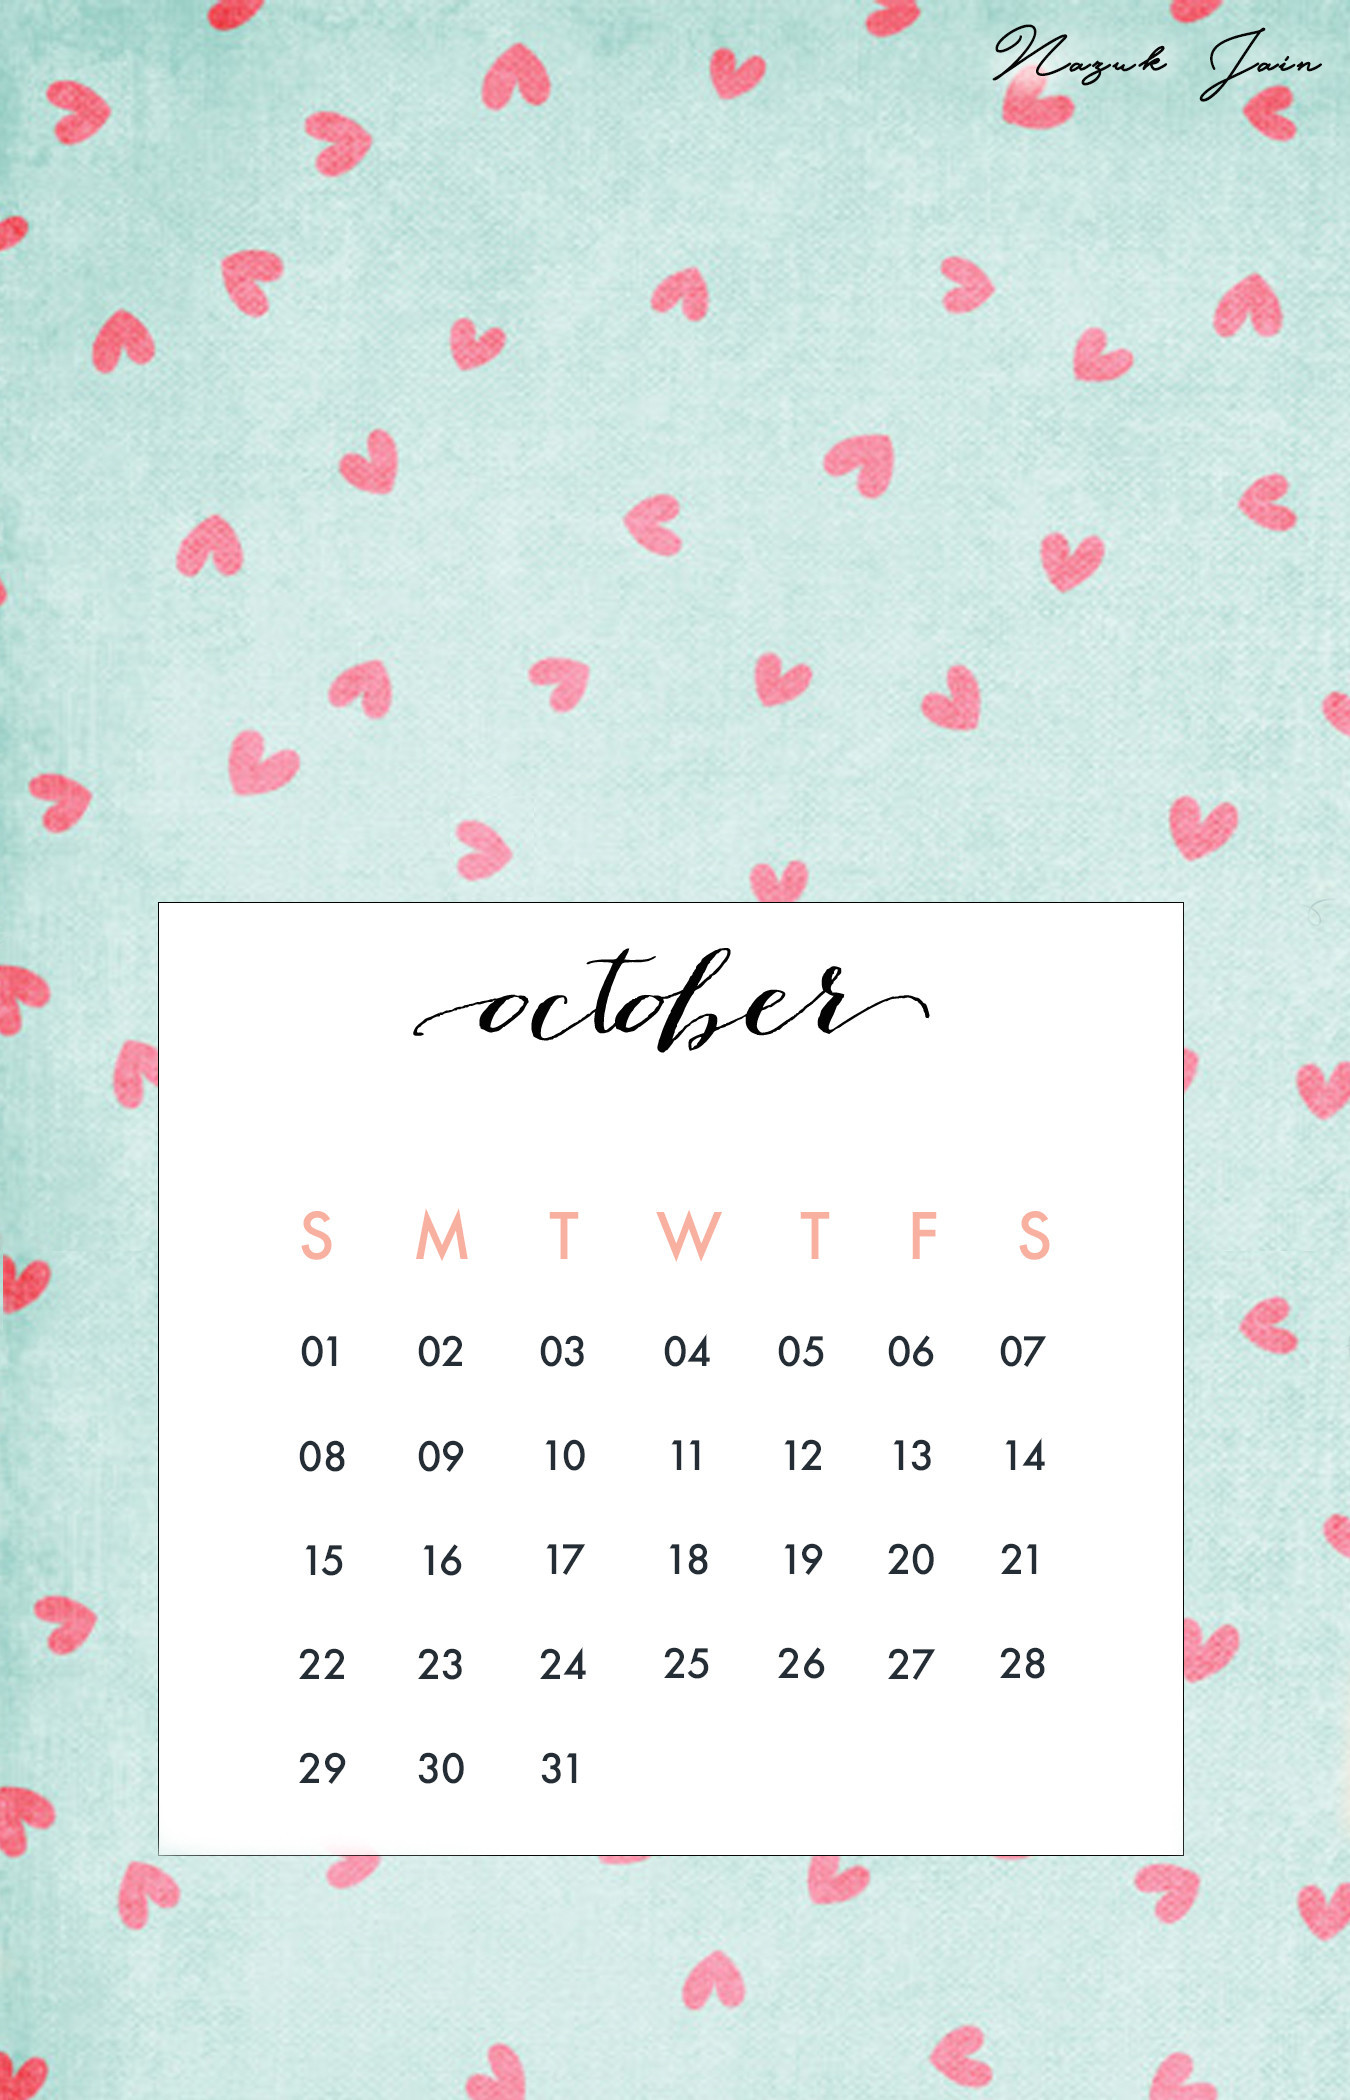 1350x2100  Wallpaper backgrounds ÃÂ· October - Free Calendar Printables 2017  by Nazuk Jain